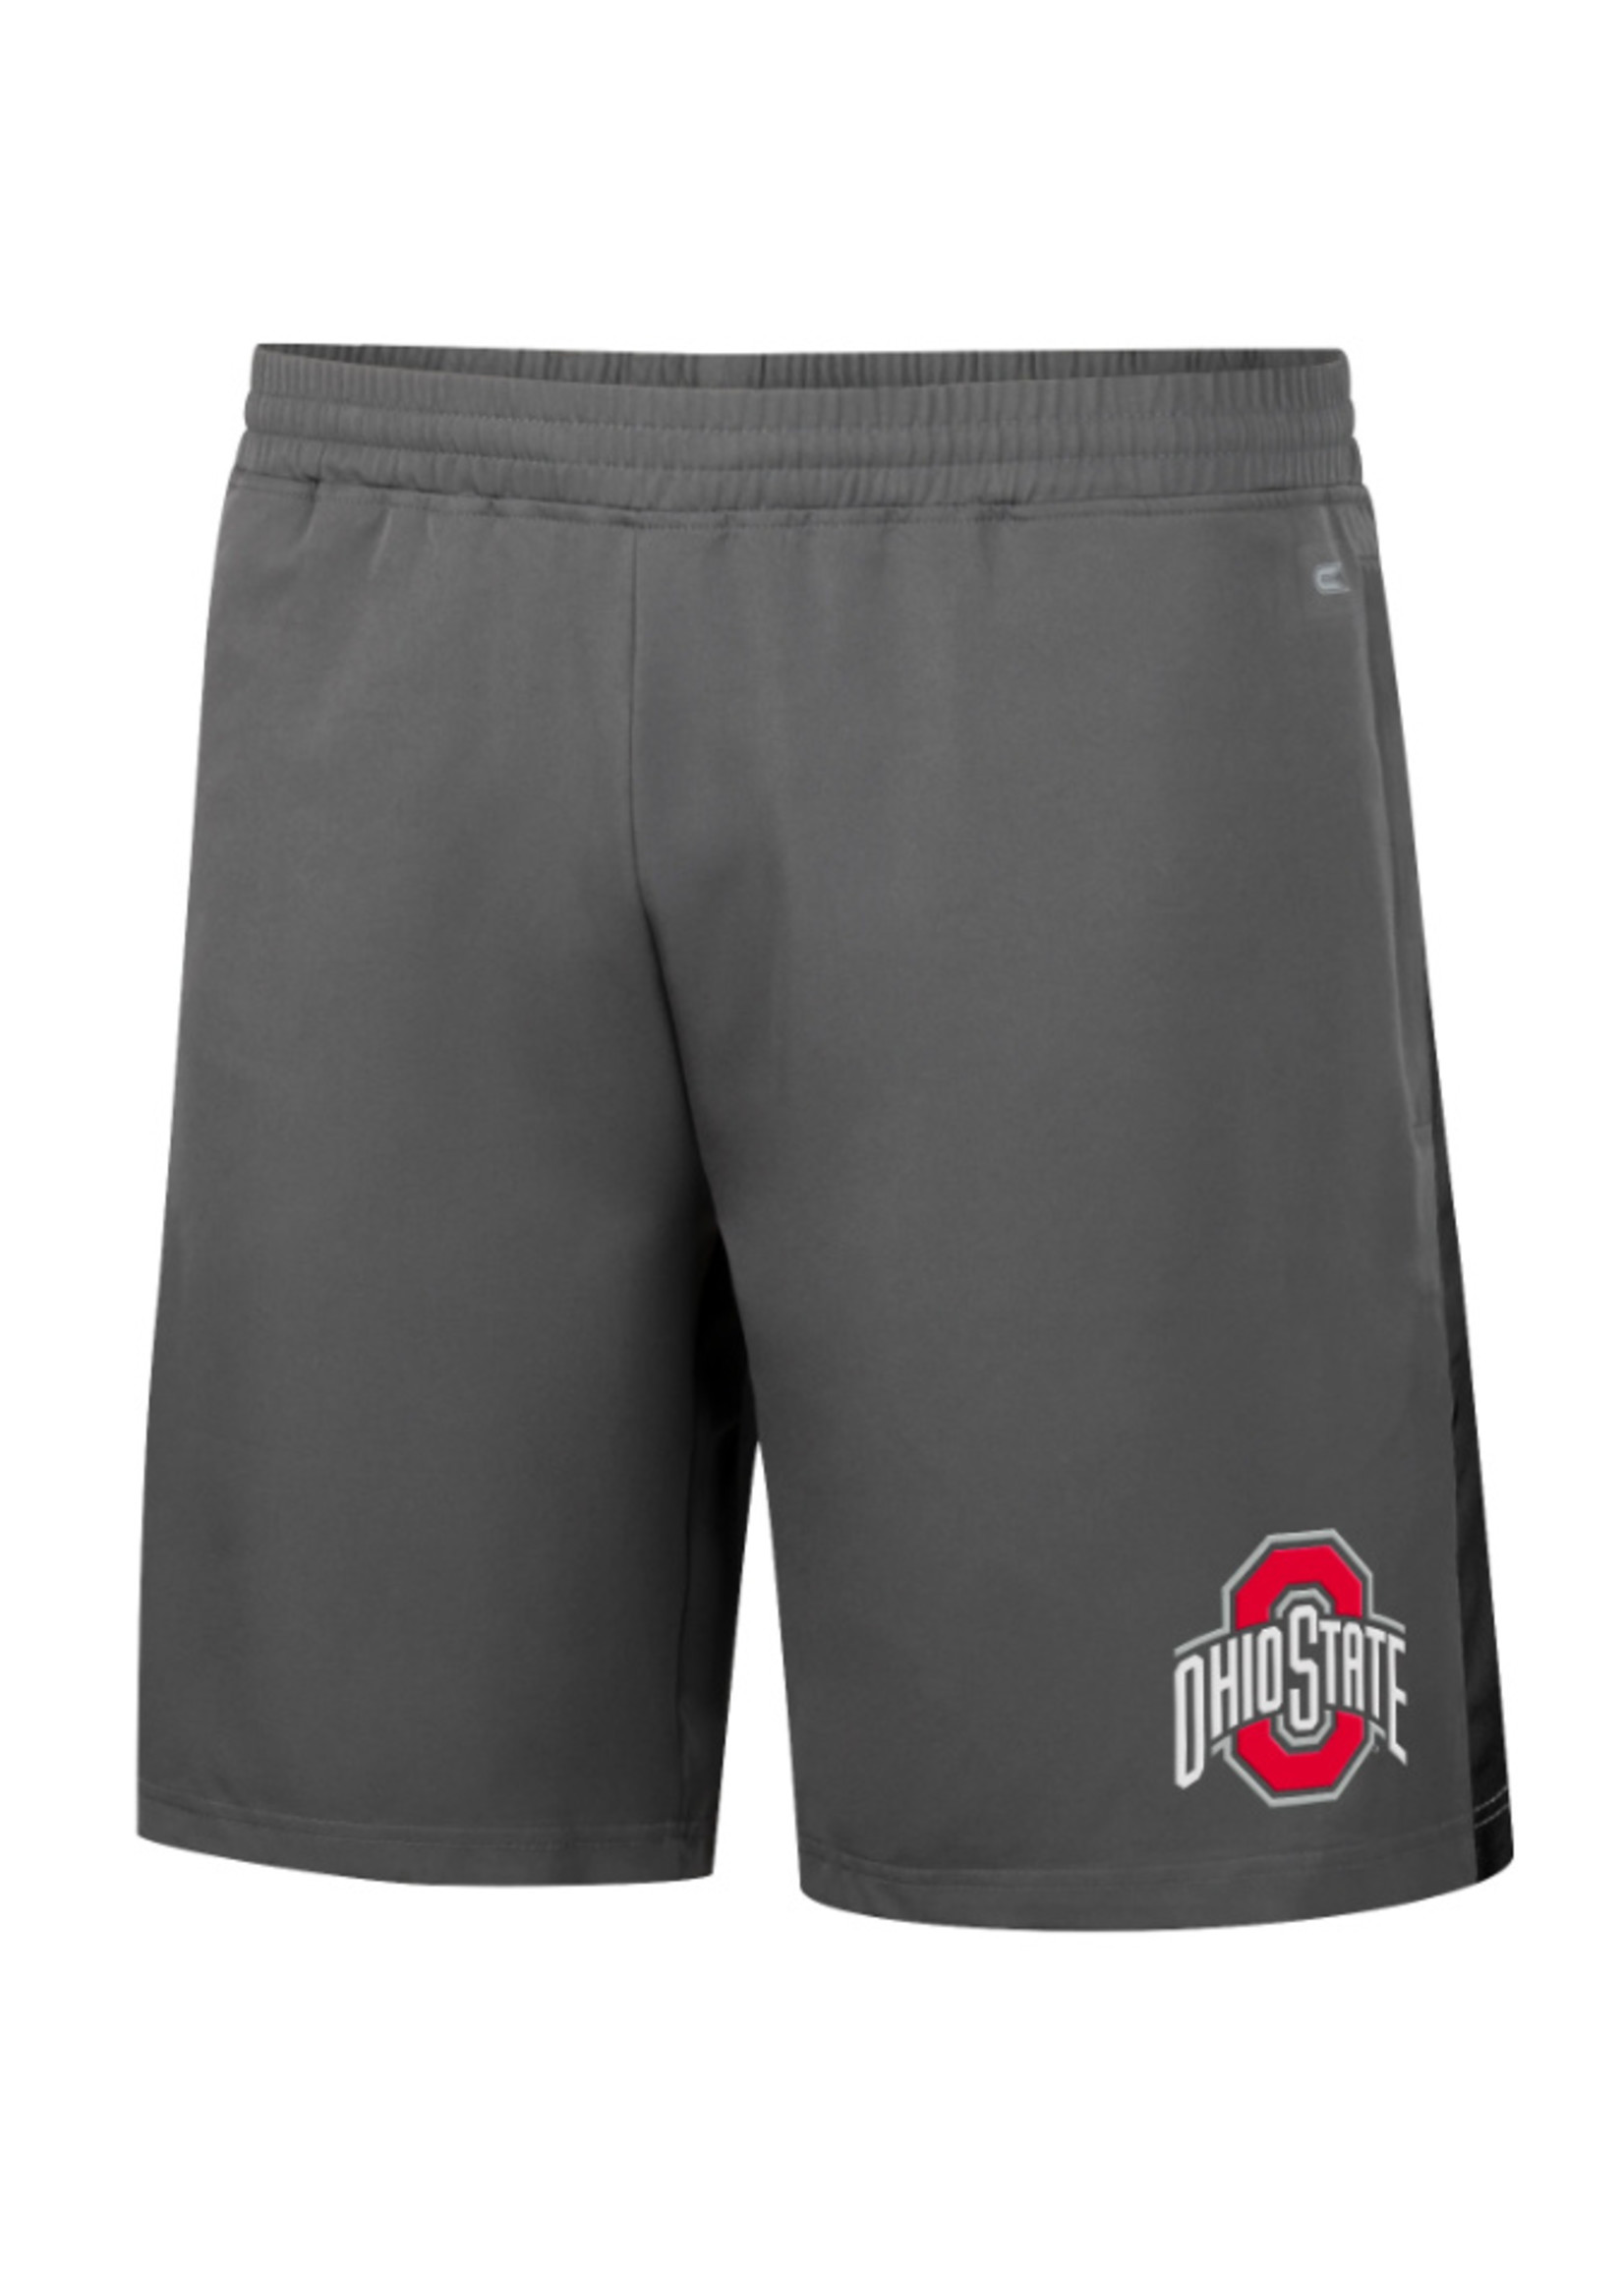 Colosseum Athletics Ohio State Buckeyes Men's Grey Shorts with Black Stripe